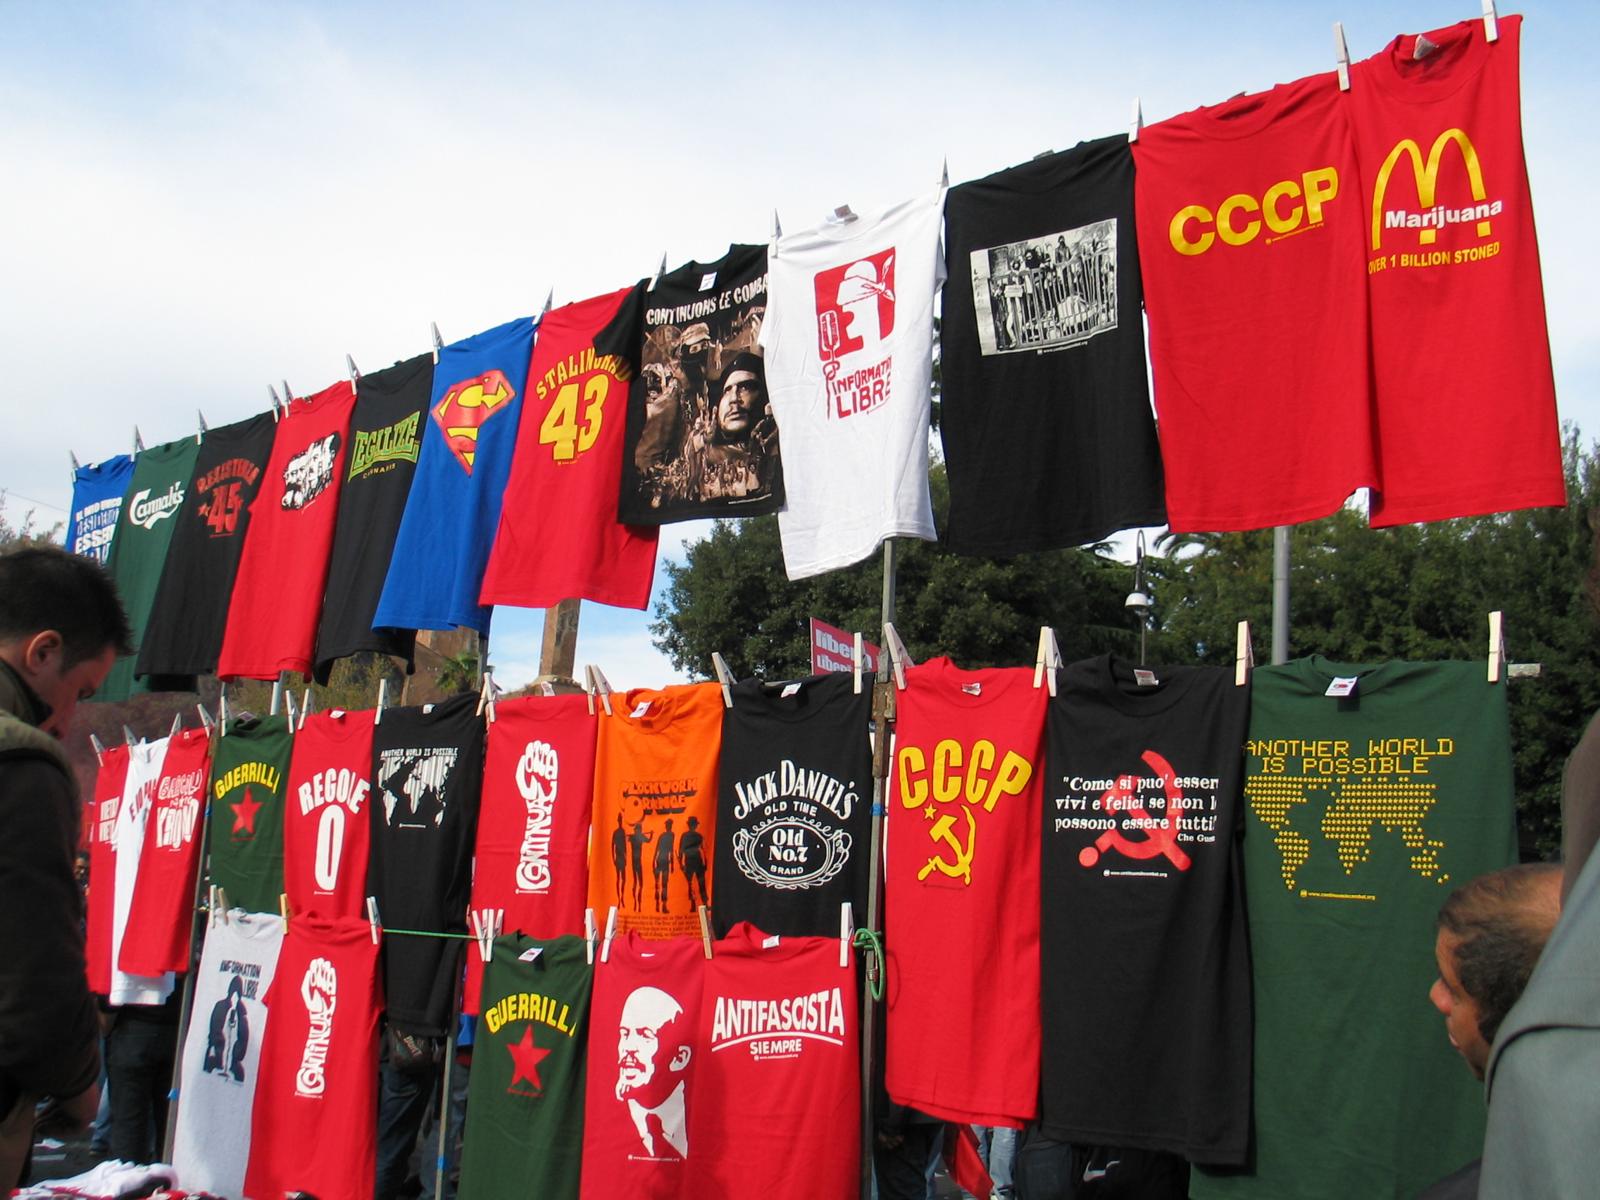 Tshirts at a Communist rally